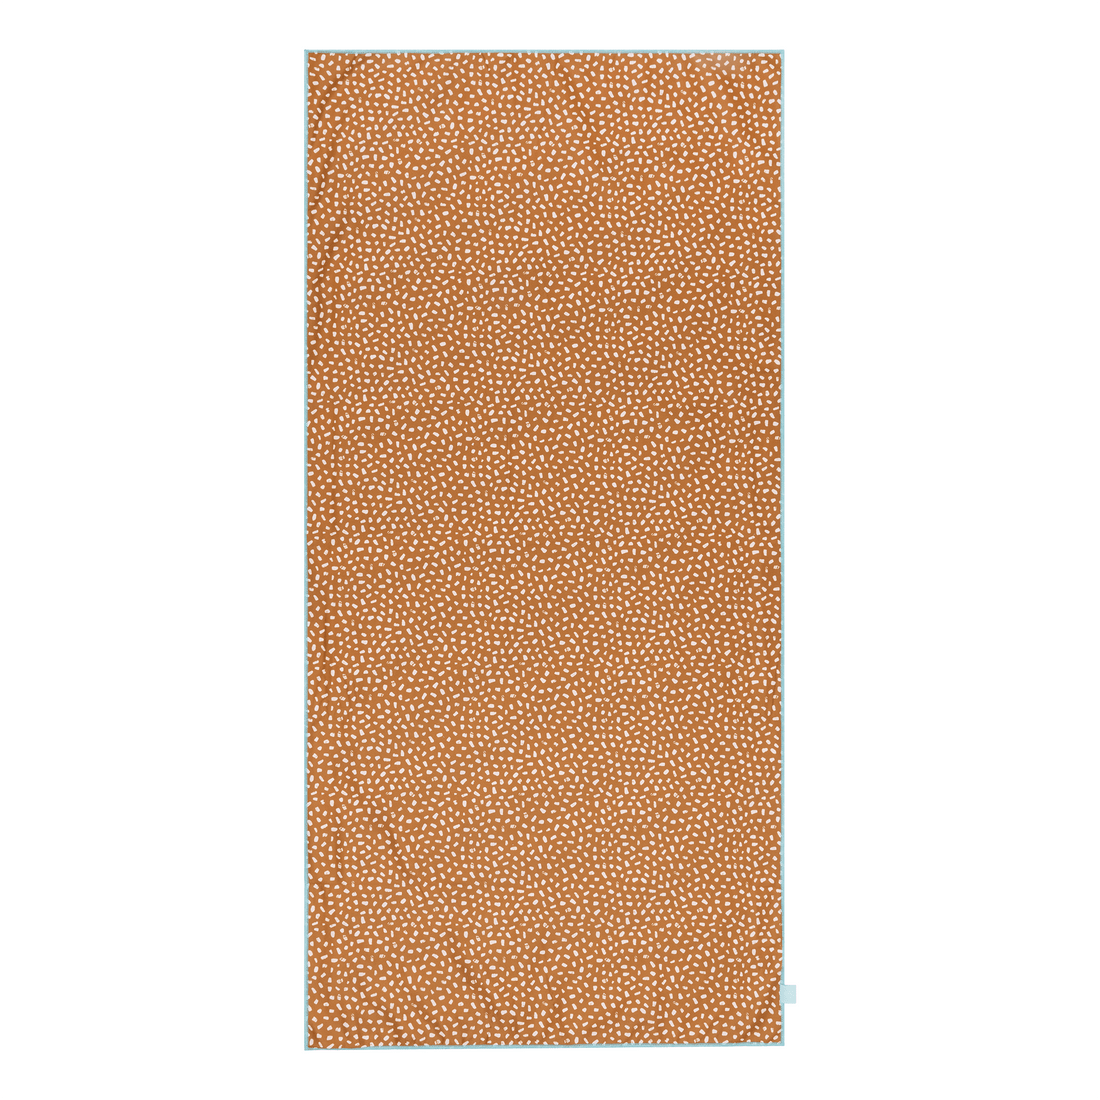 microvezel-handdoek-oranje-zebra-180x90-cm-swim-essentials-1